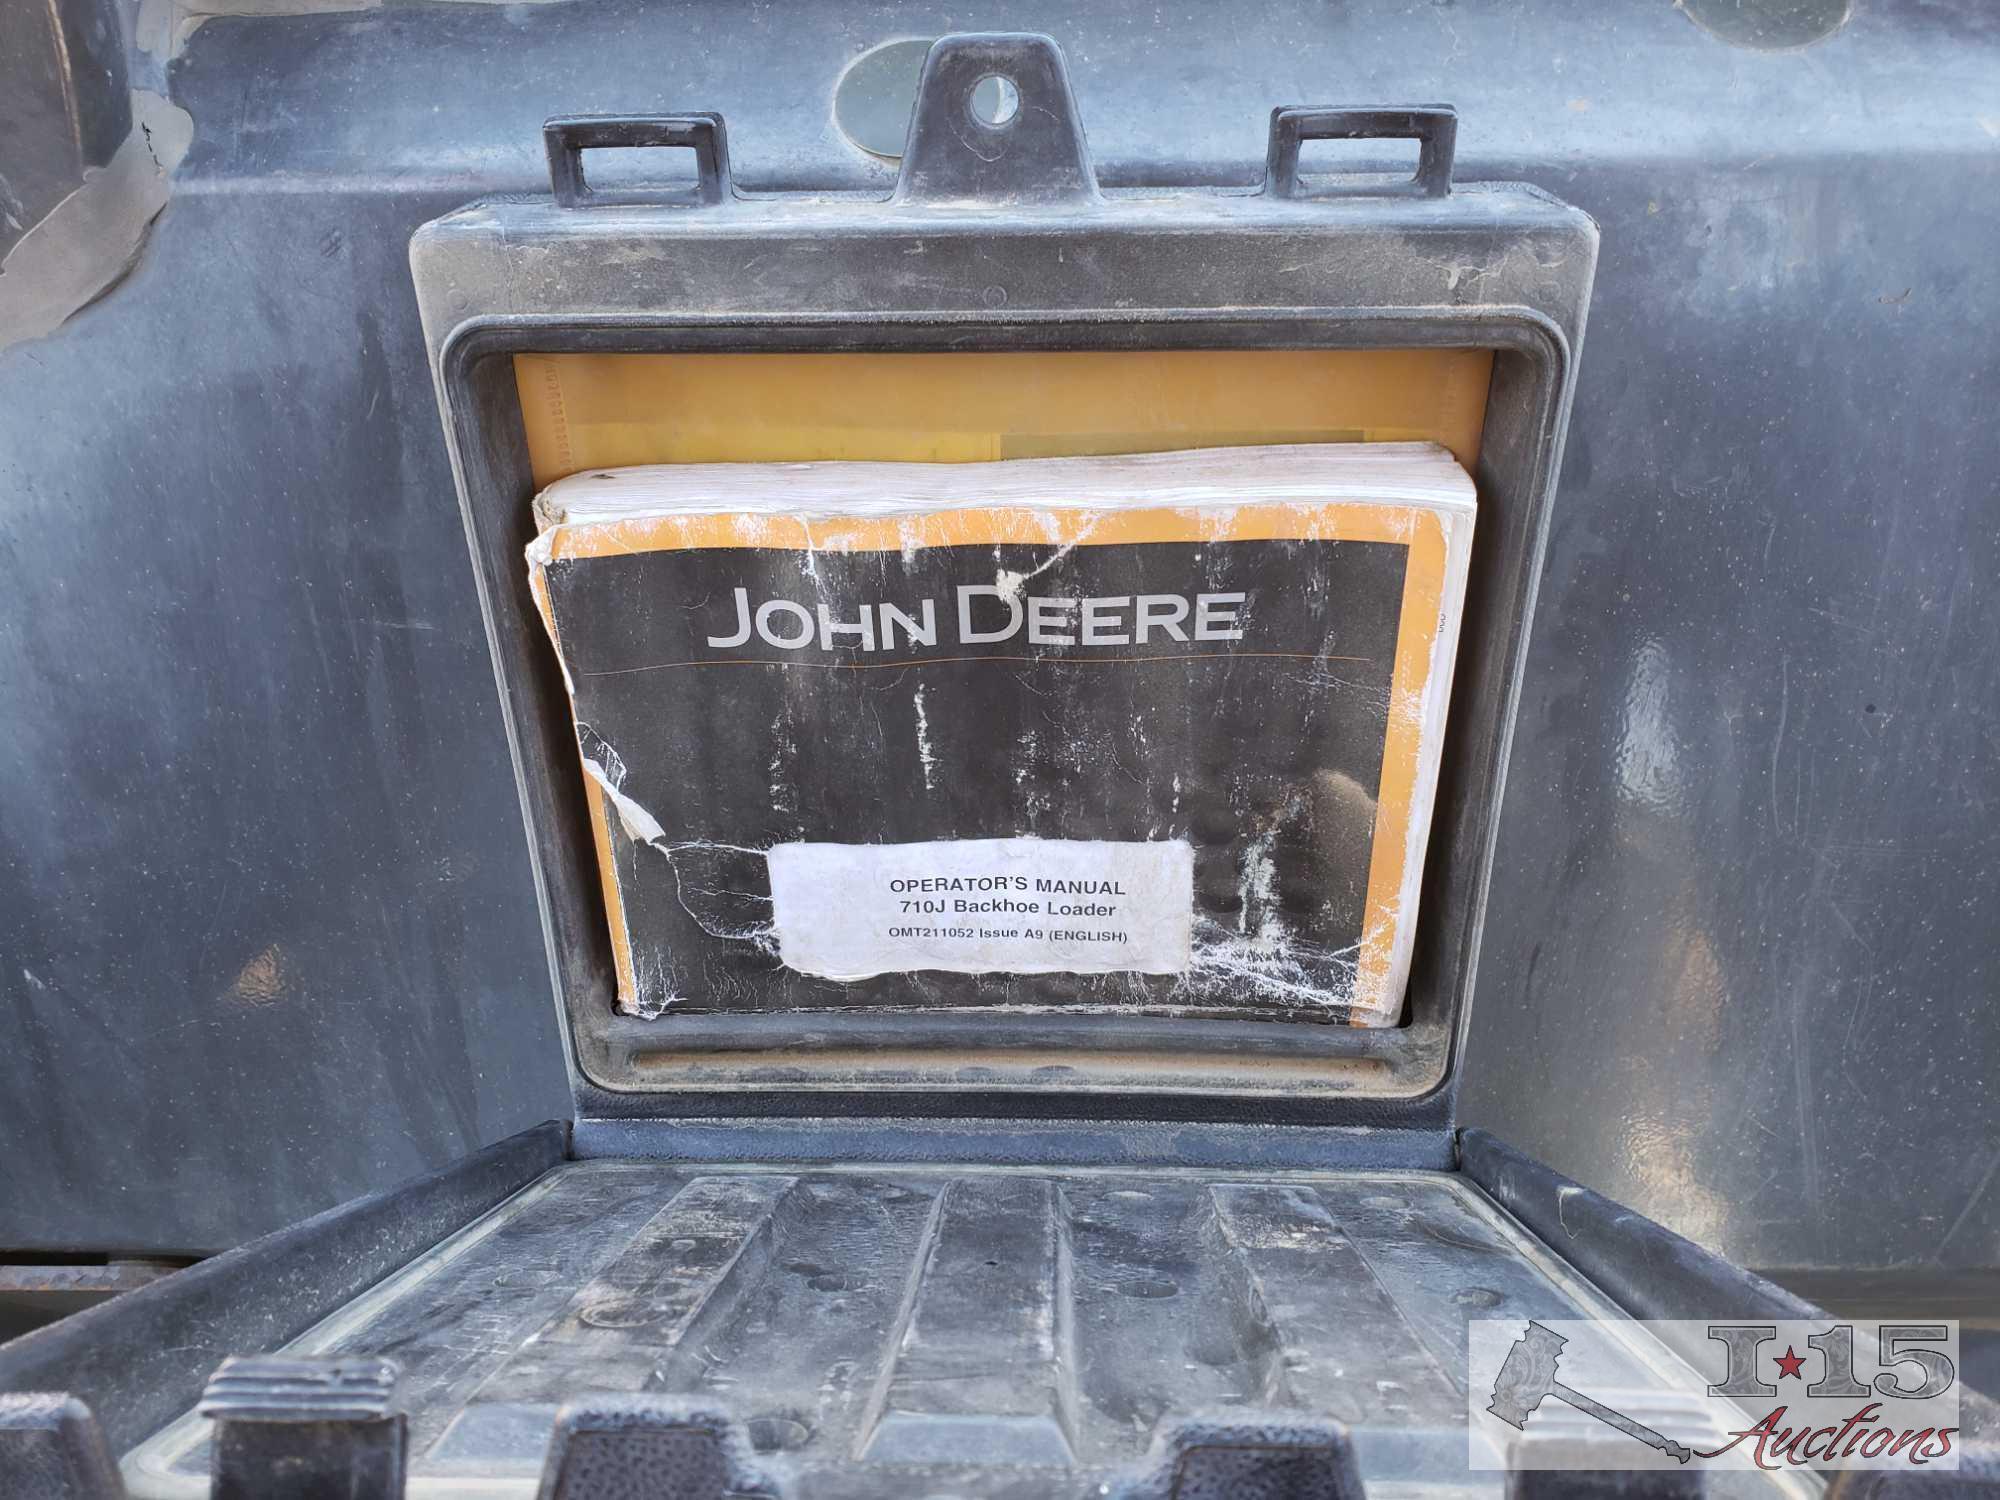 2009 4x4 John Deere 710J Backhoe with 18", 24", 35", 48" Buckets & compaction Wheel, 4in1, See Video